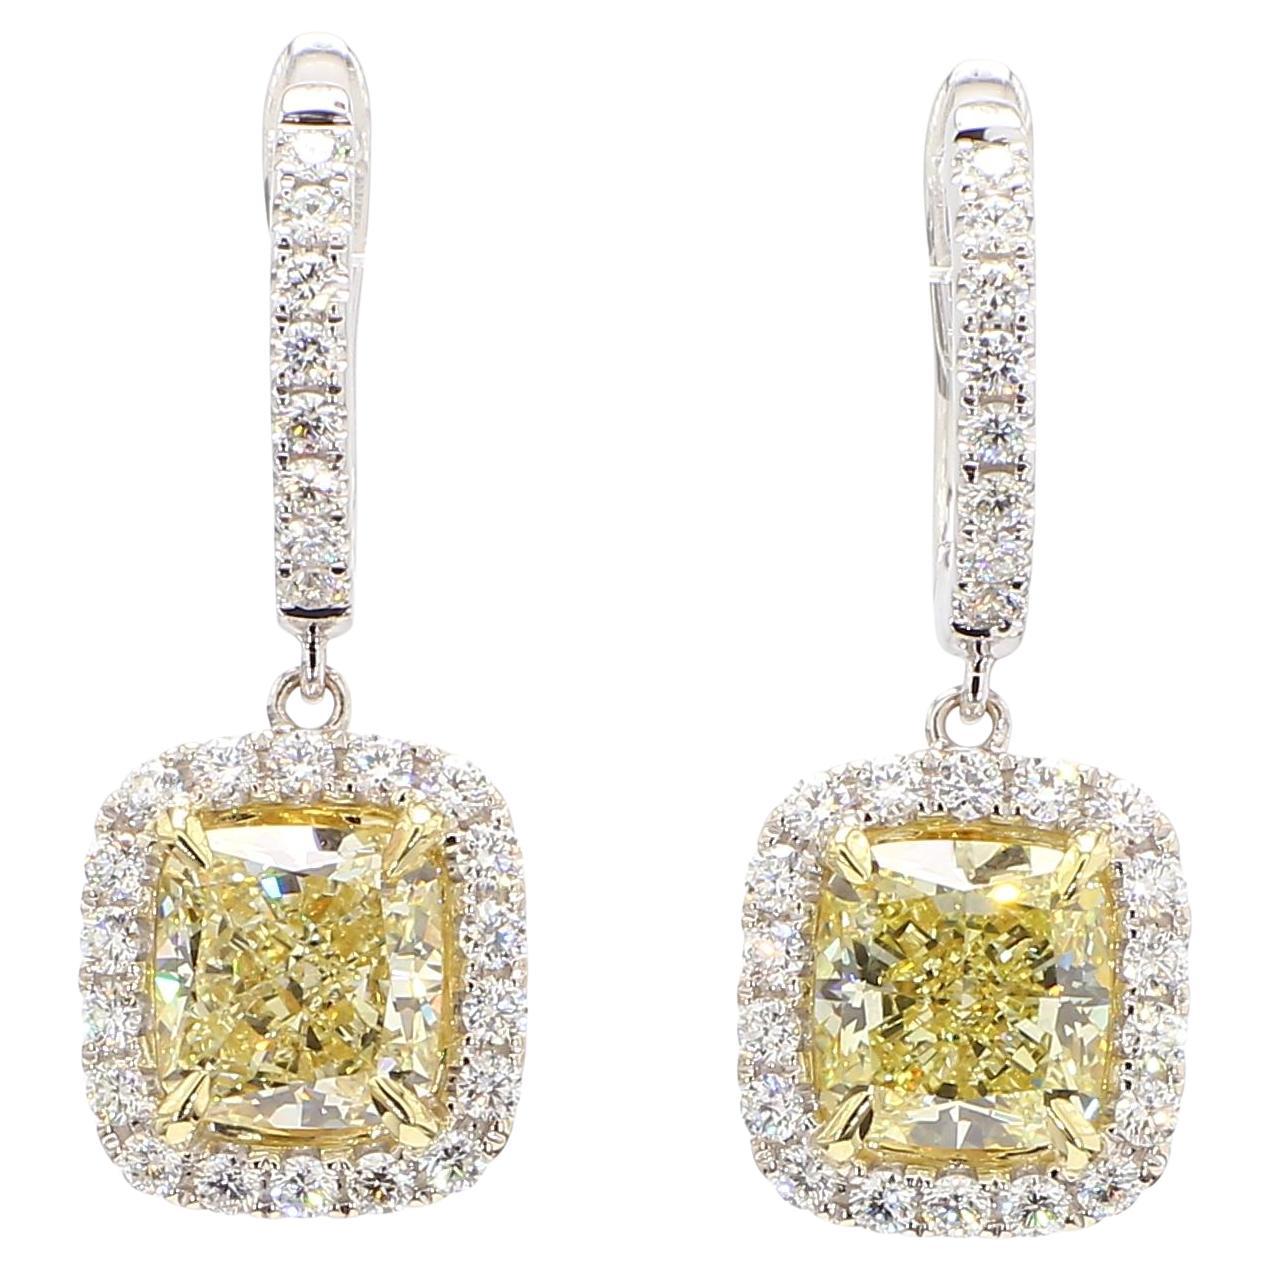 GIA Certified Natural Yellow Cushion Diamond 5.24 Carat TW Gold Drop Earrings